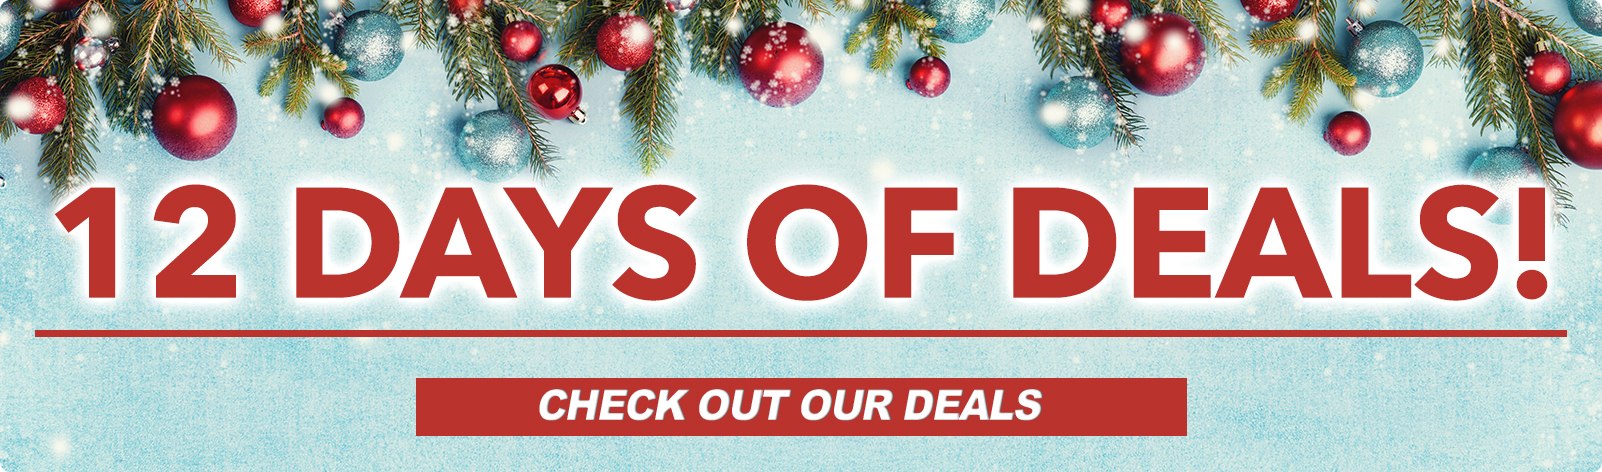 12 Days of Deals!